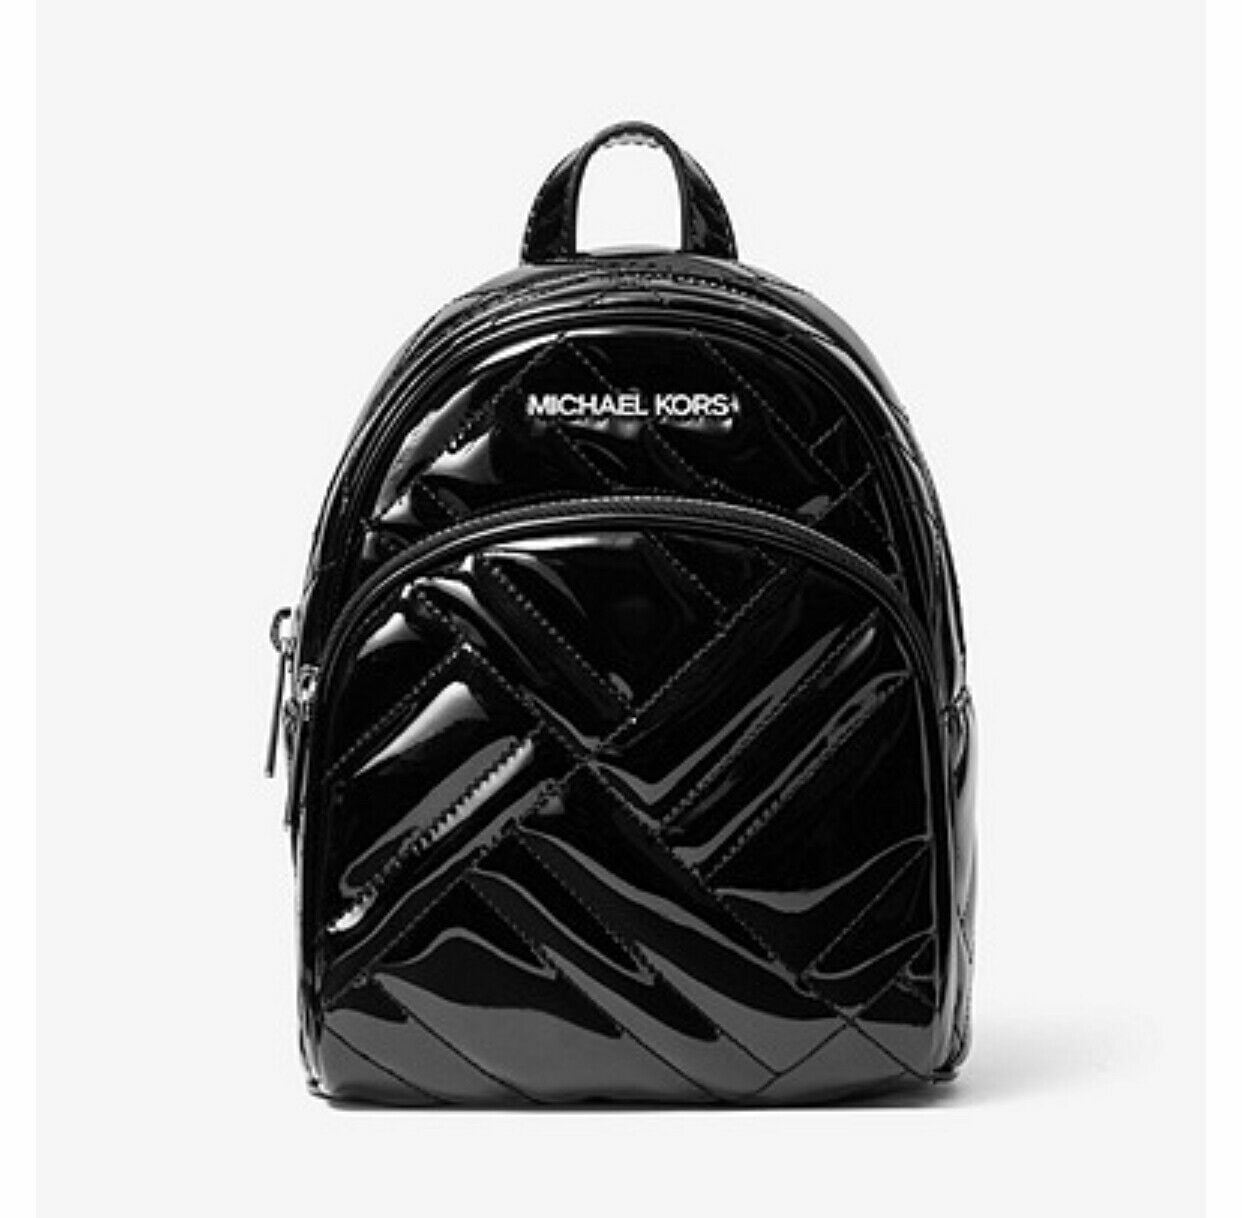 michael kors black mini backpack